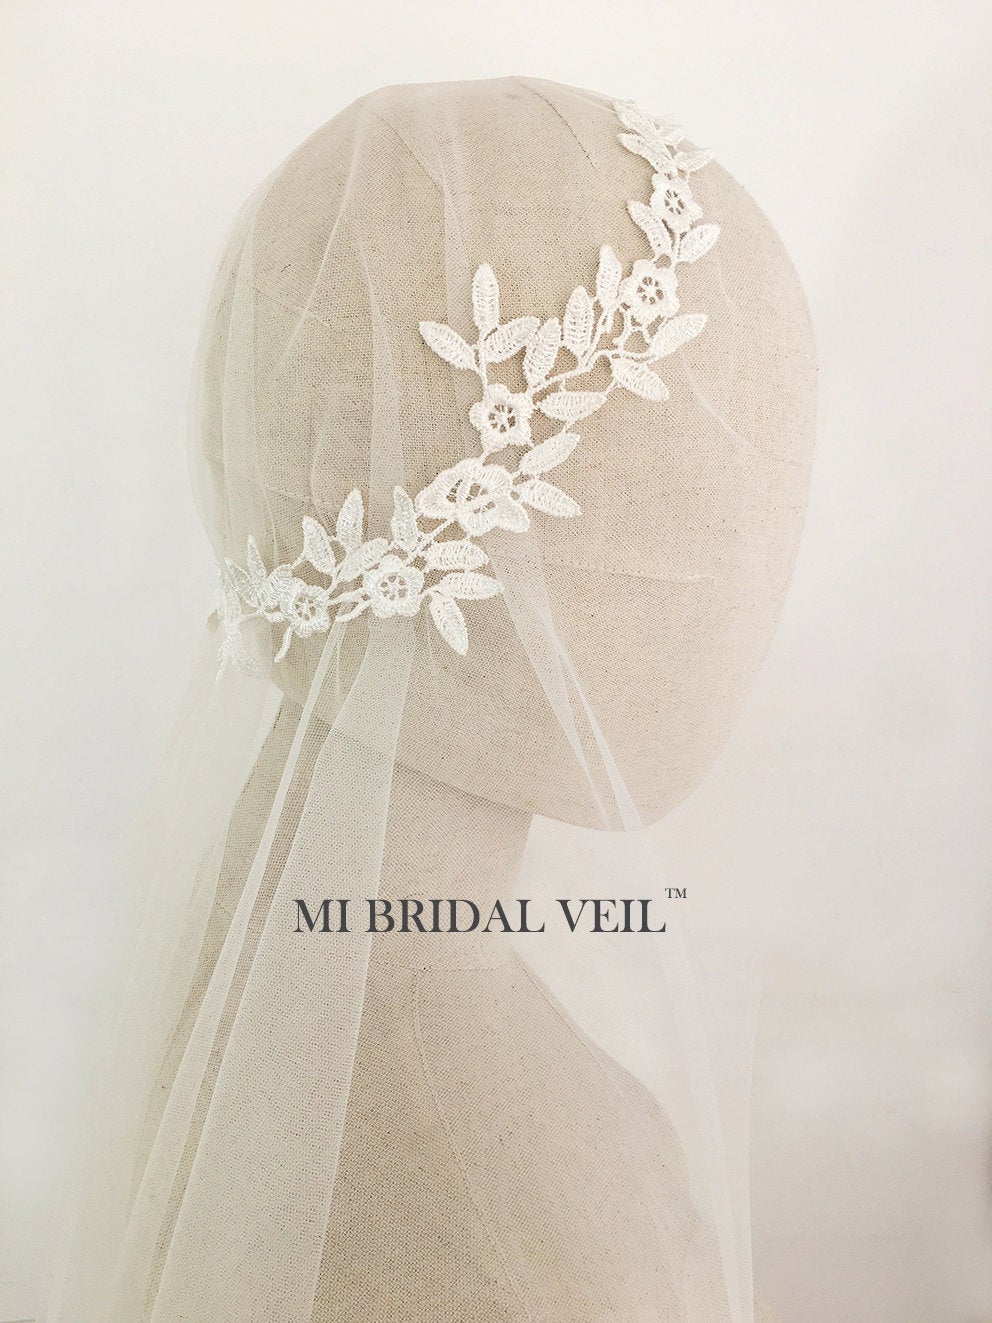 Juliet Cap Veil,1920s Inspired Bridal Veil, Rose Lace Wedding Veil, Mi Bridal